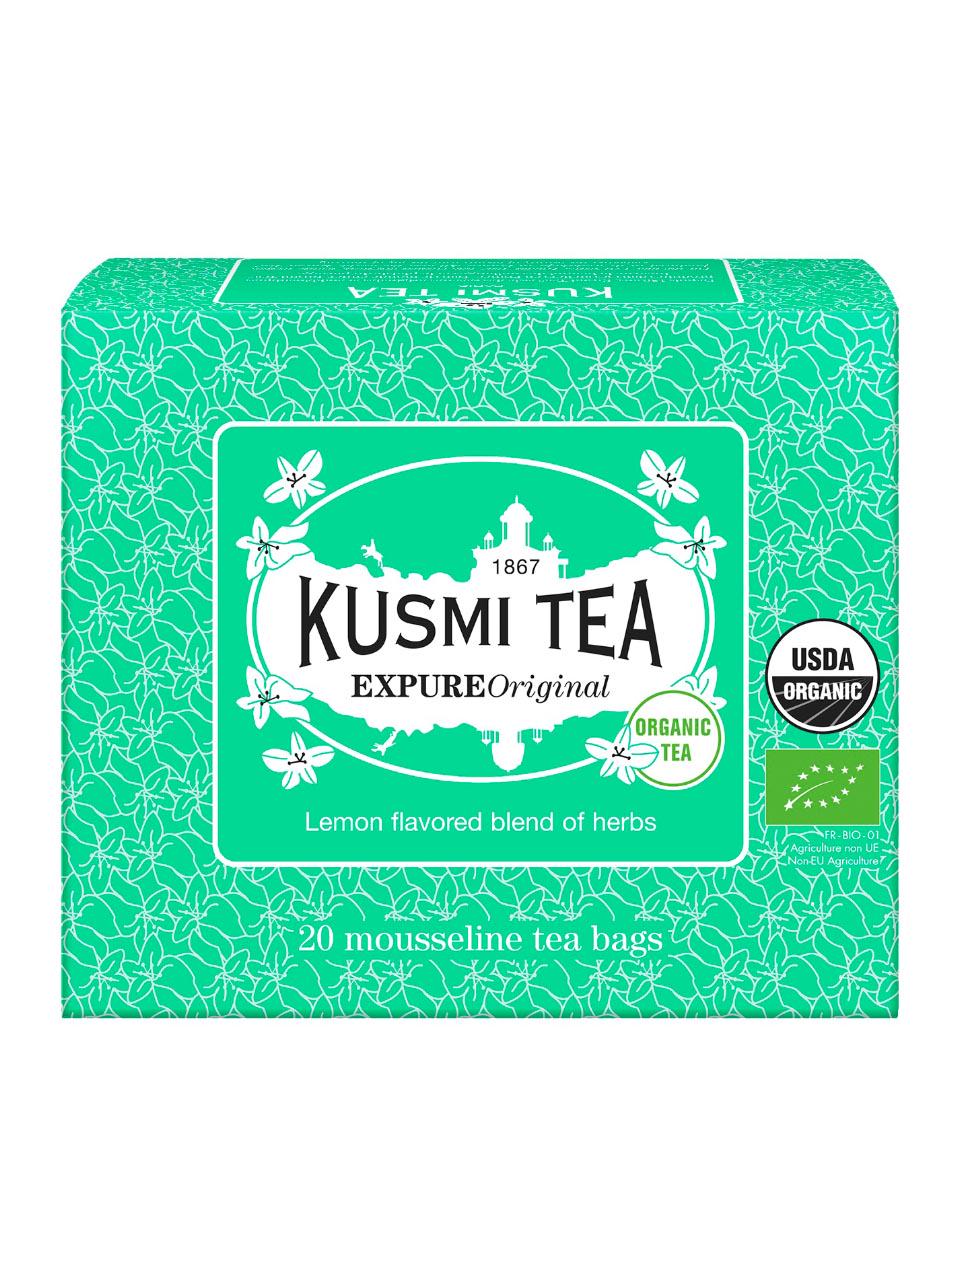 Box of 24 tea bags and infusions Kusmi Tea - Organic Essentials - Kusmi Tea